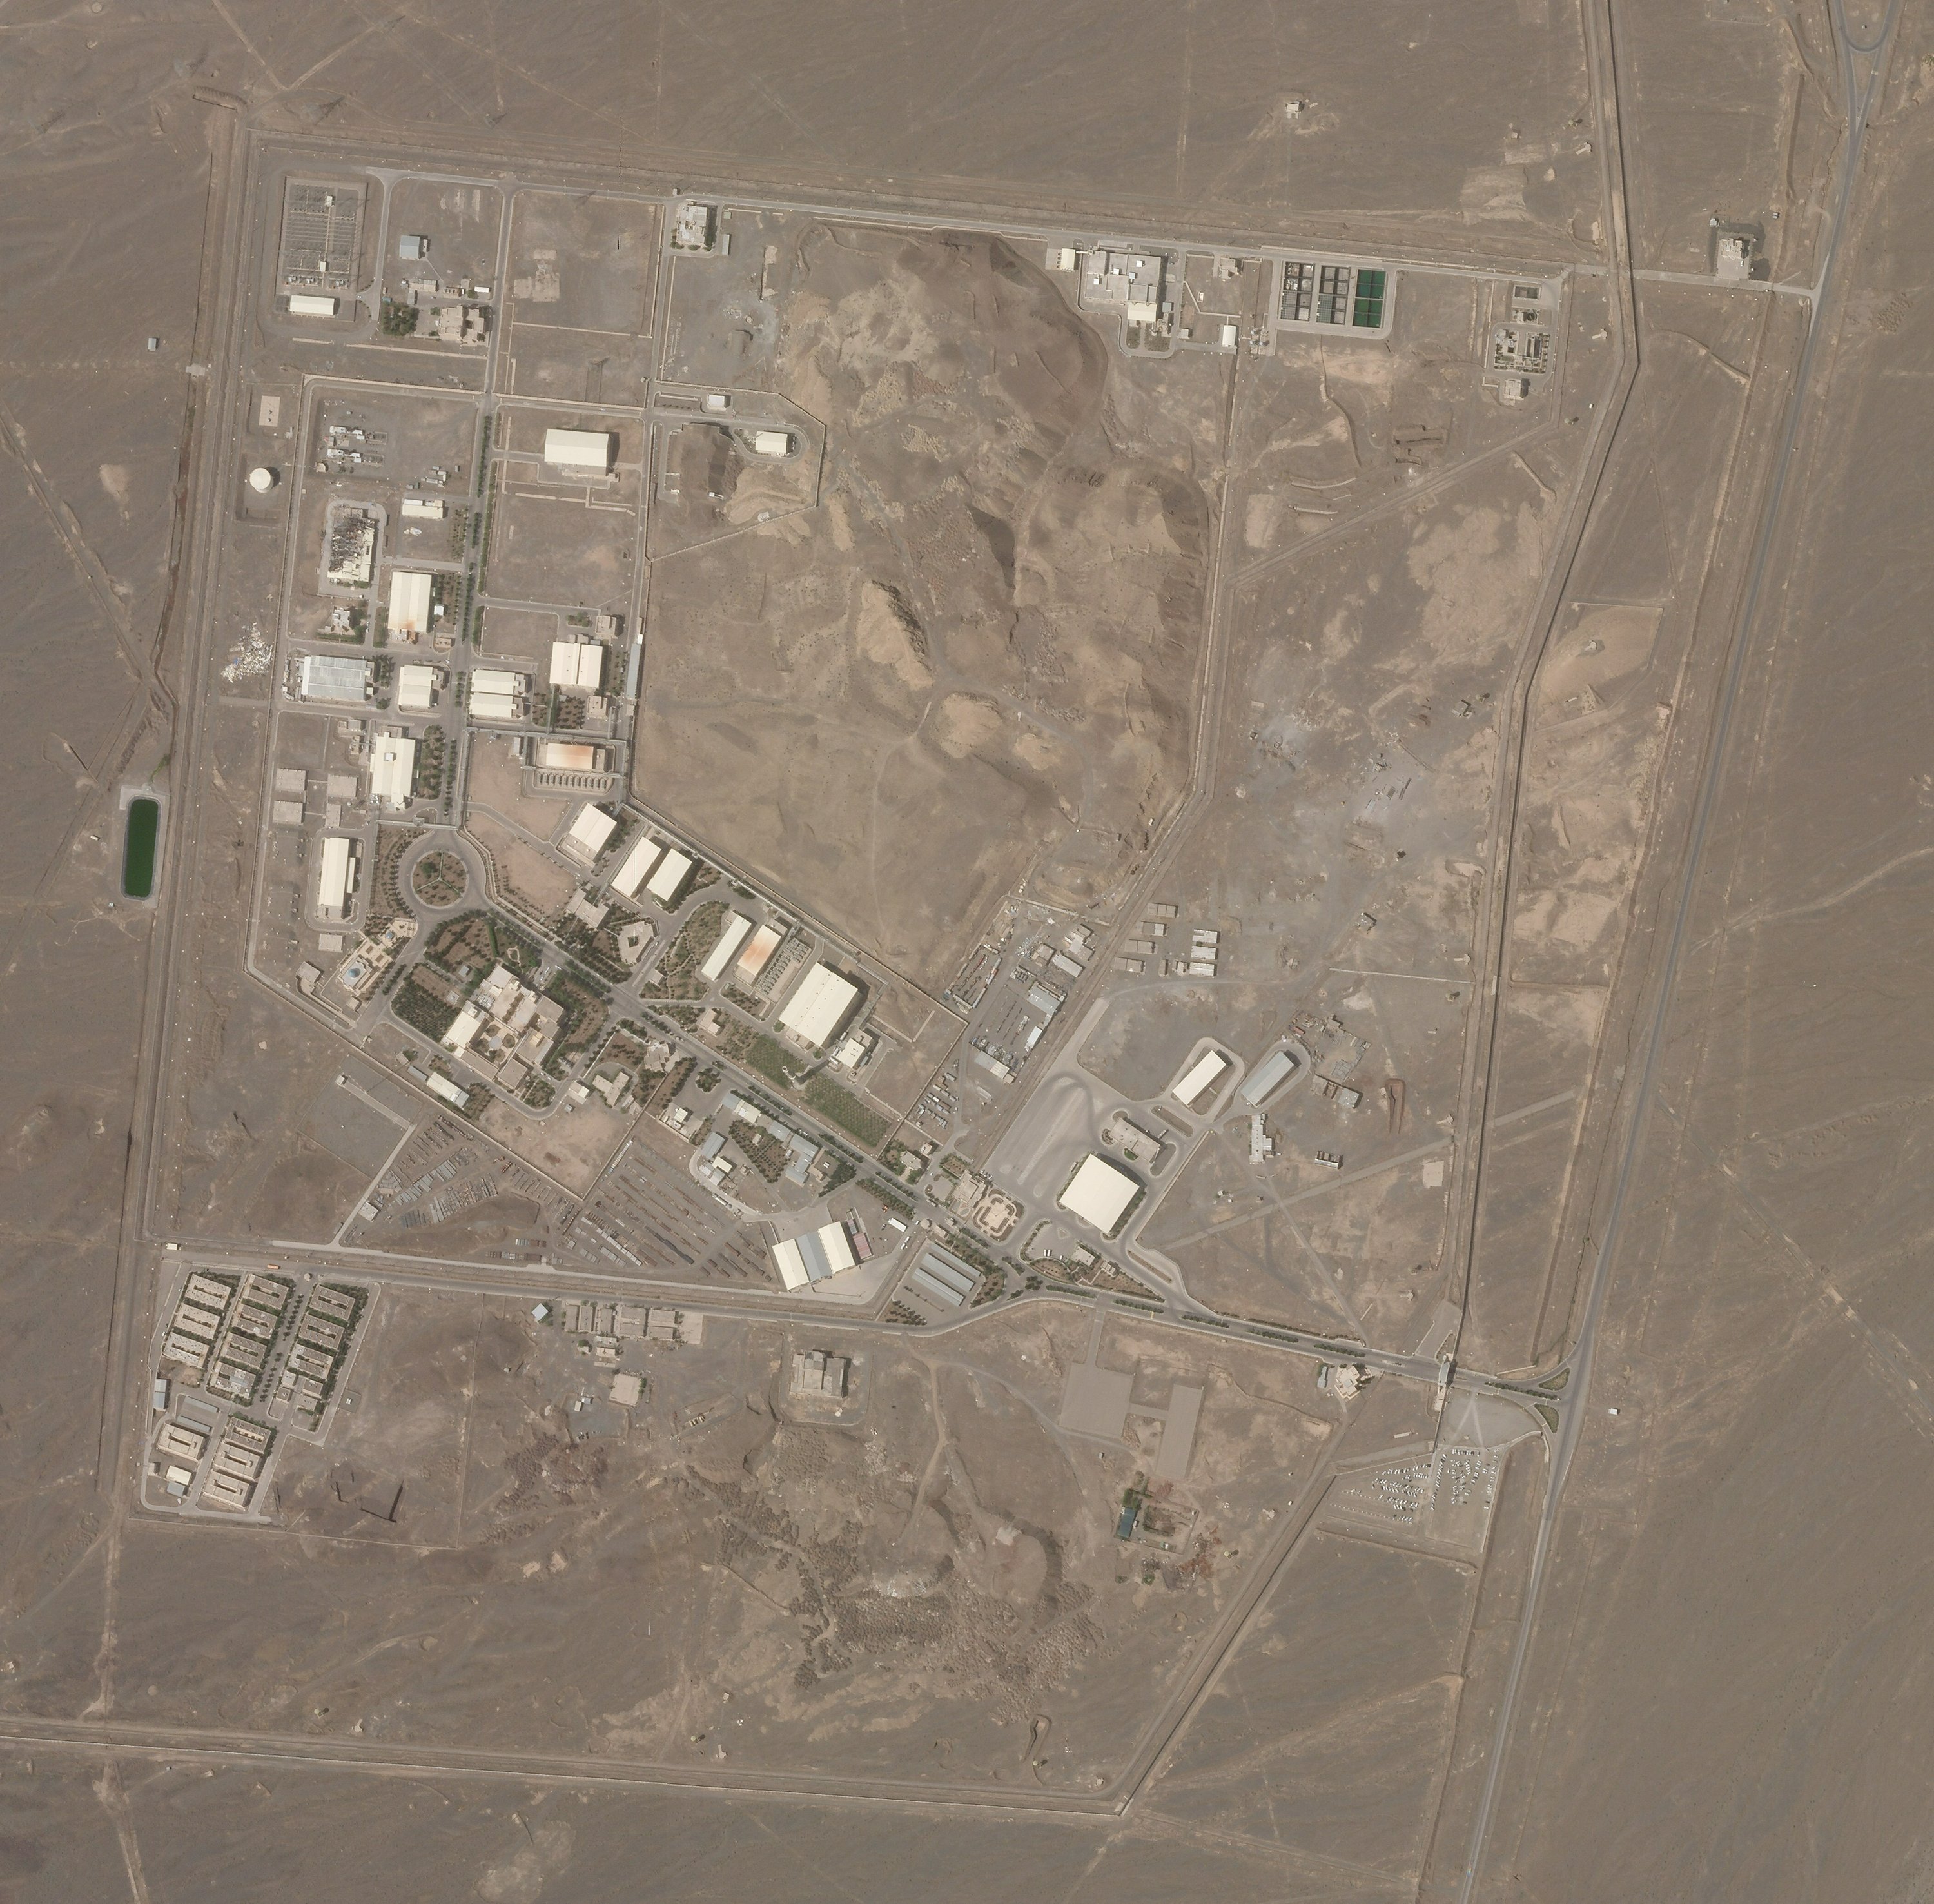 Electrical problem strikes Iran's Natanz nuclear facility thumbnail